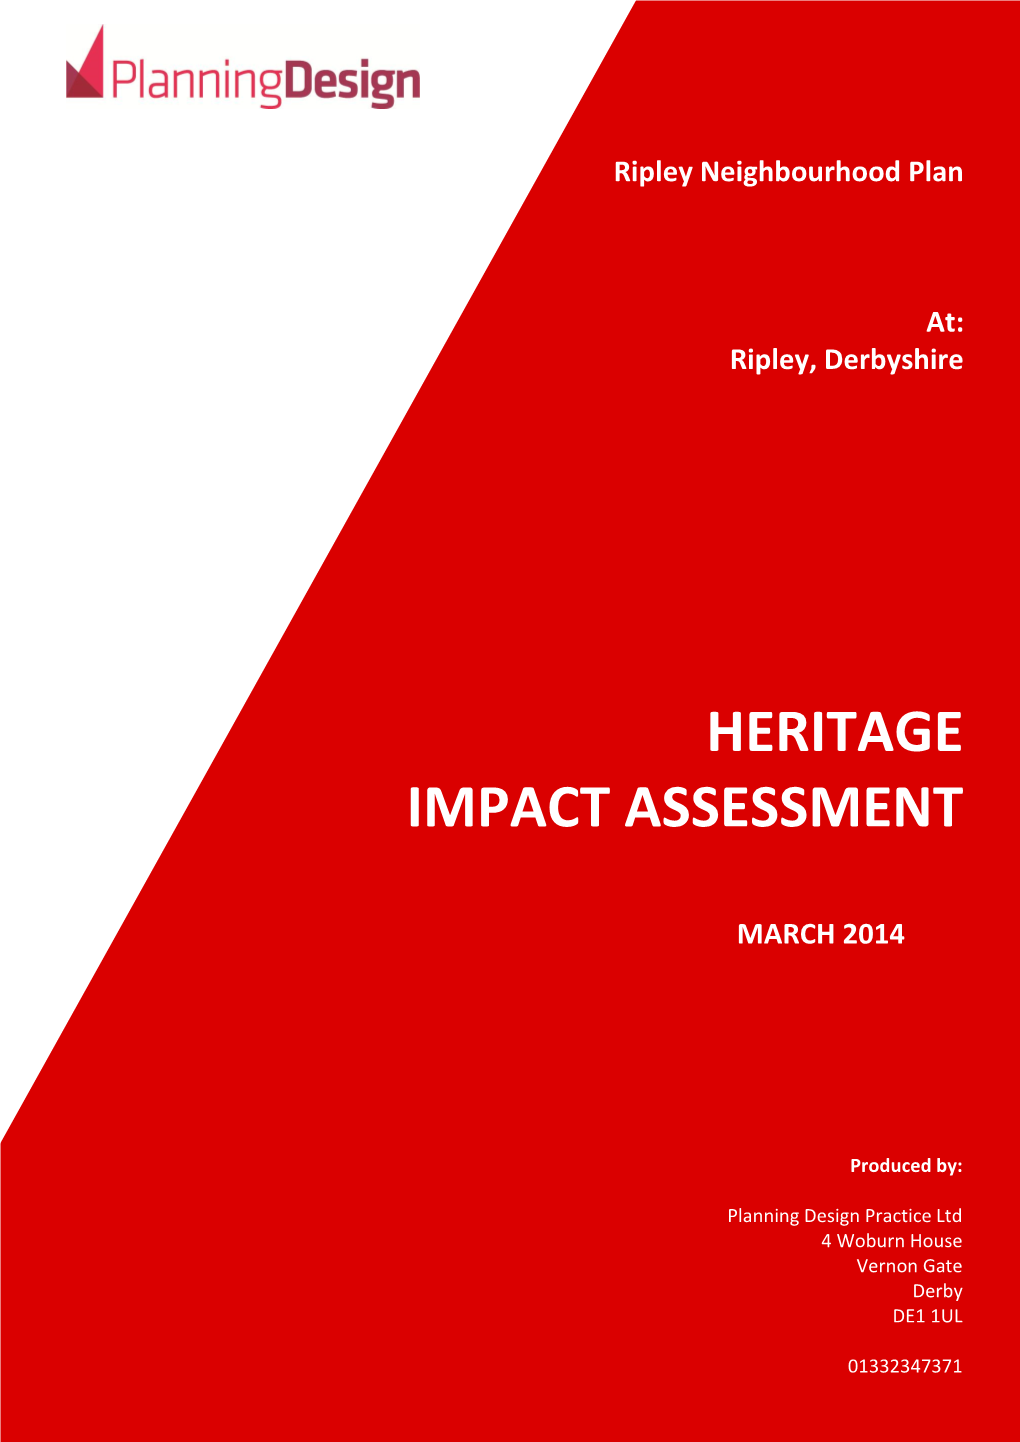 Heritage Impact Assessment